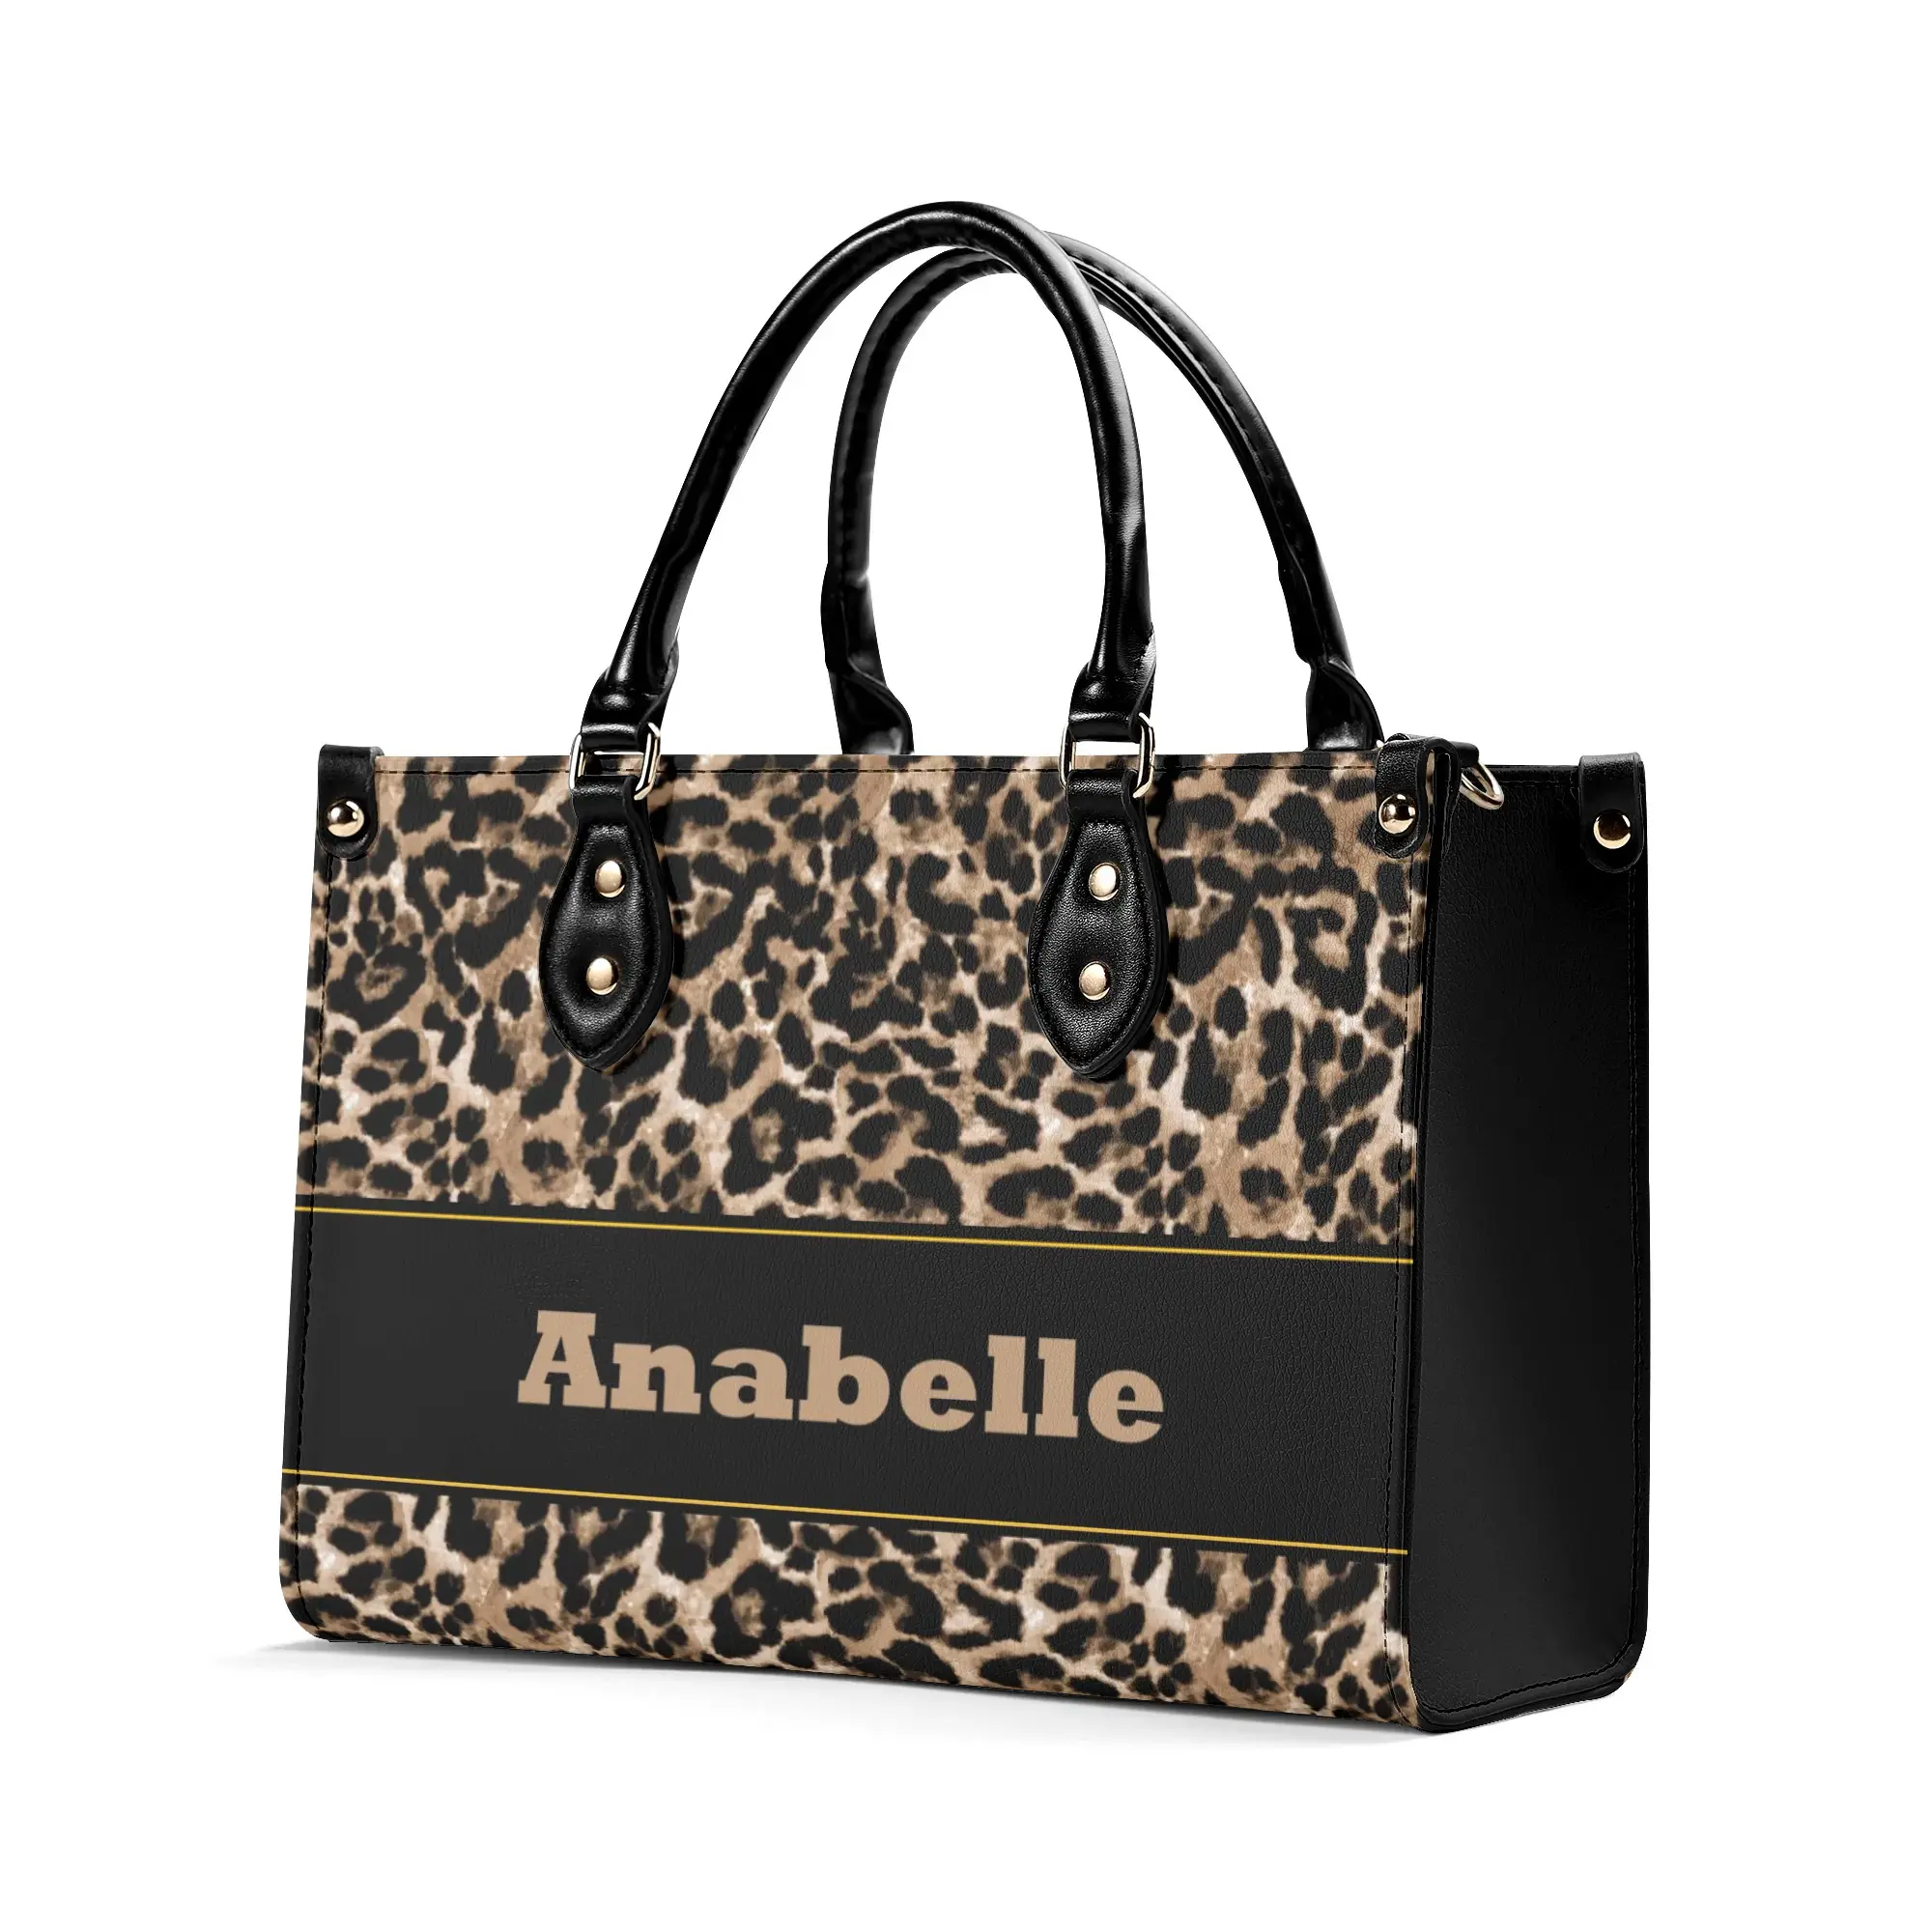 Personalized Leather Handbag Leopard